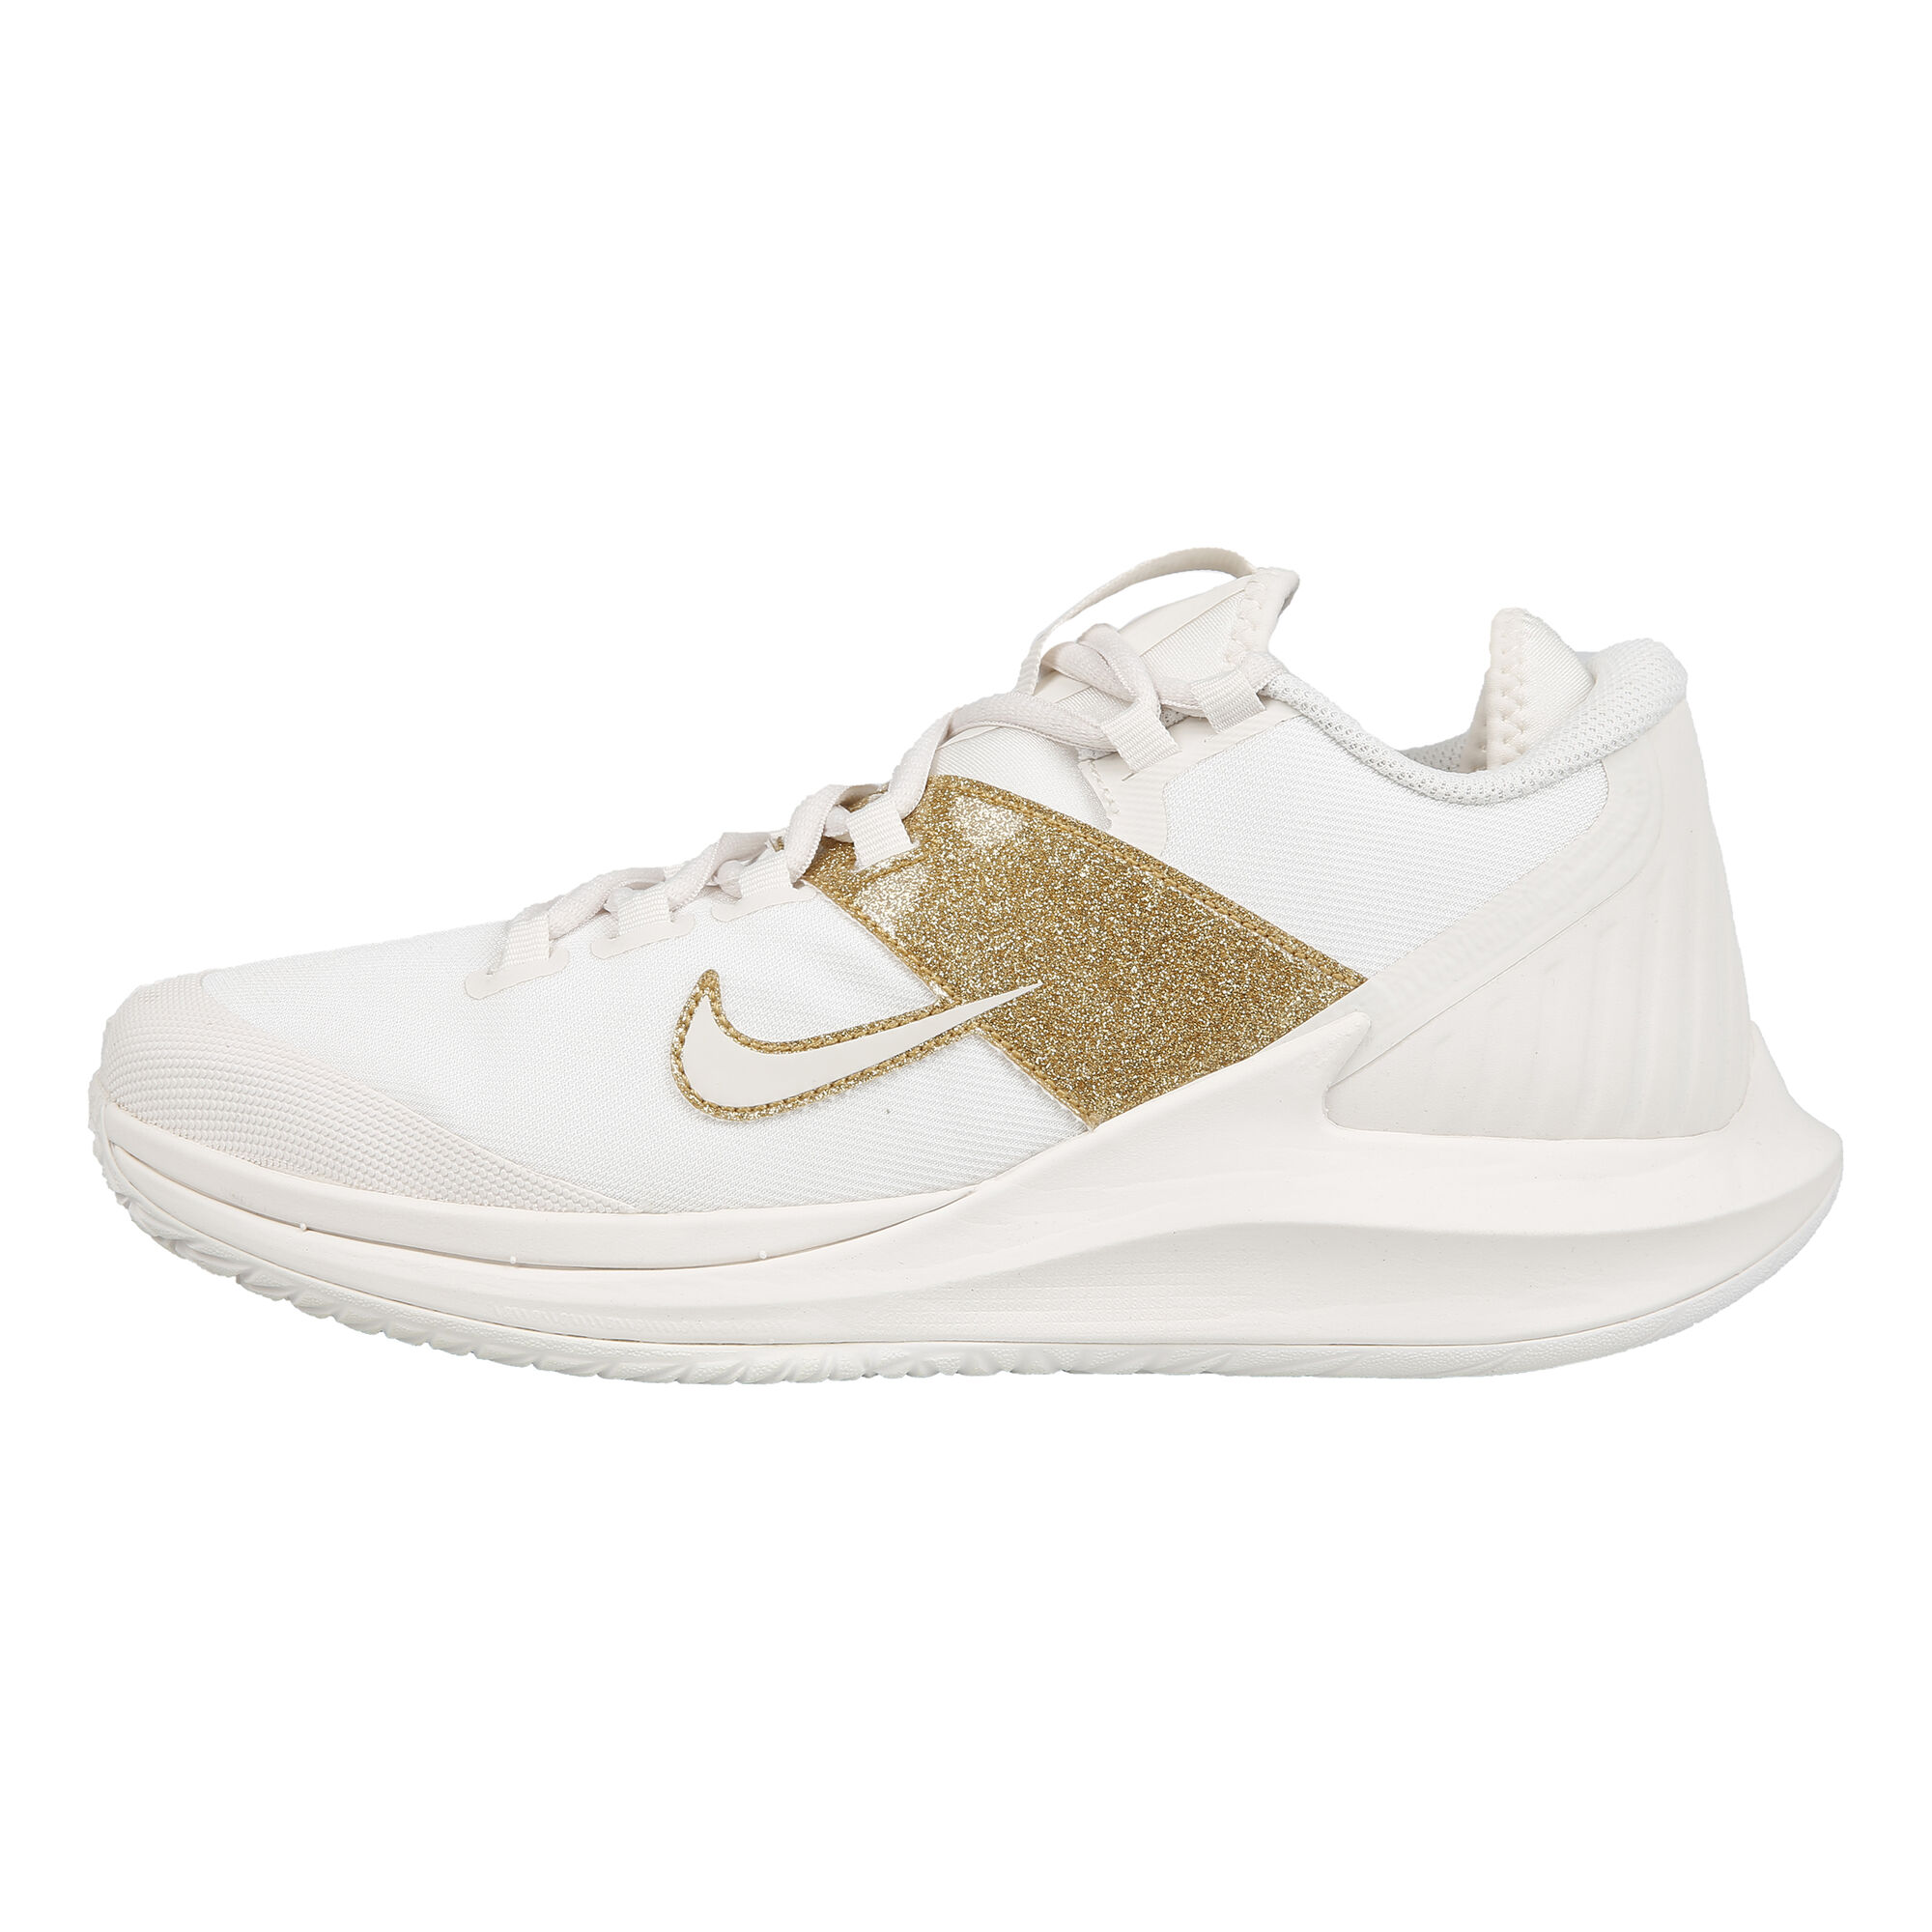 buy Nike Air Zoom Zero All Court Shoe Women - White, Gold online